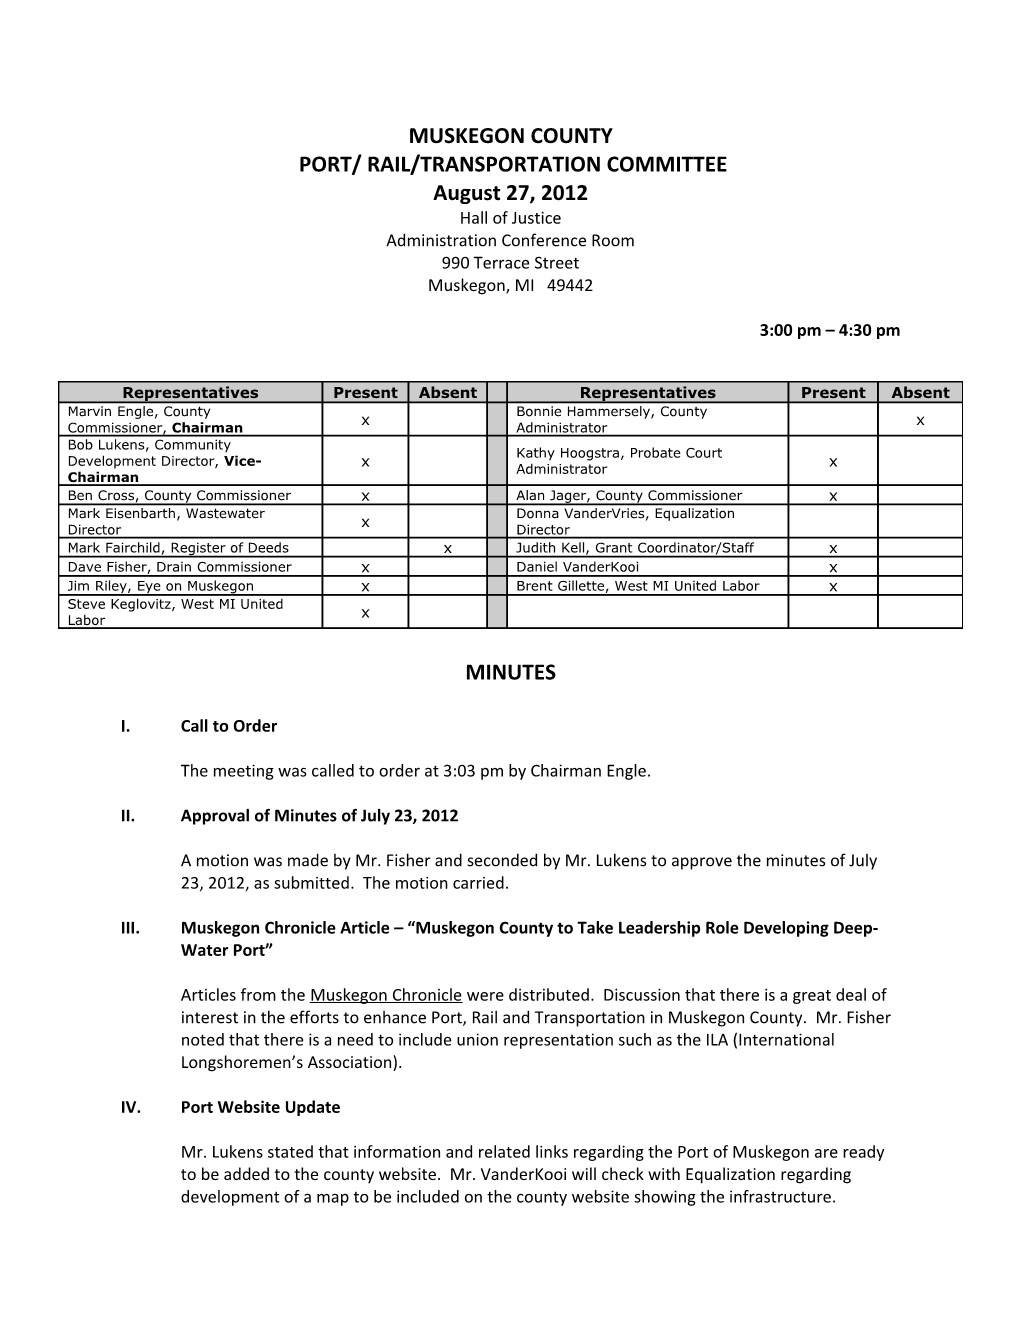 Port/ Rail/Transportation Committee